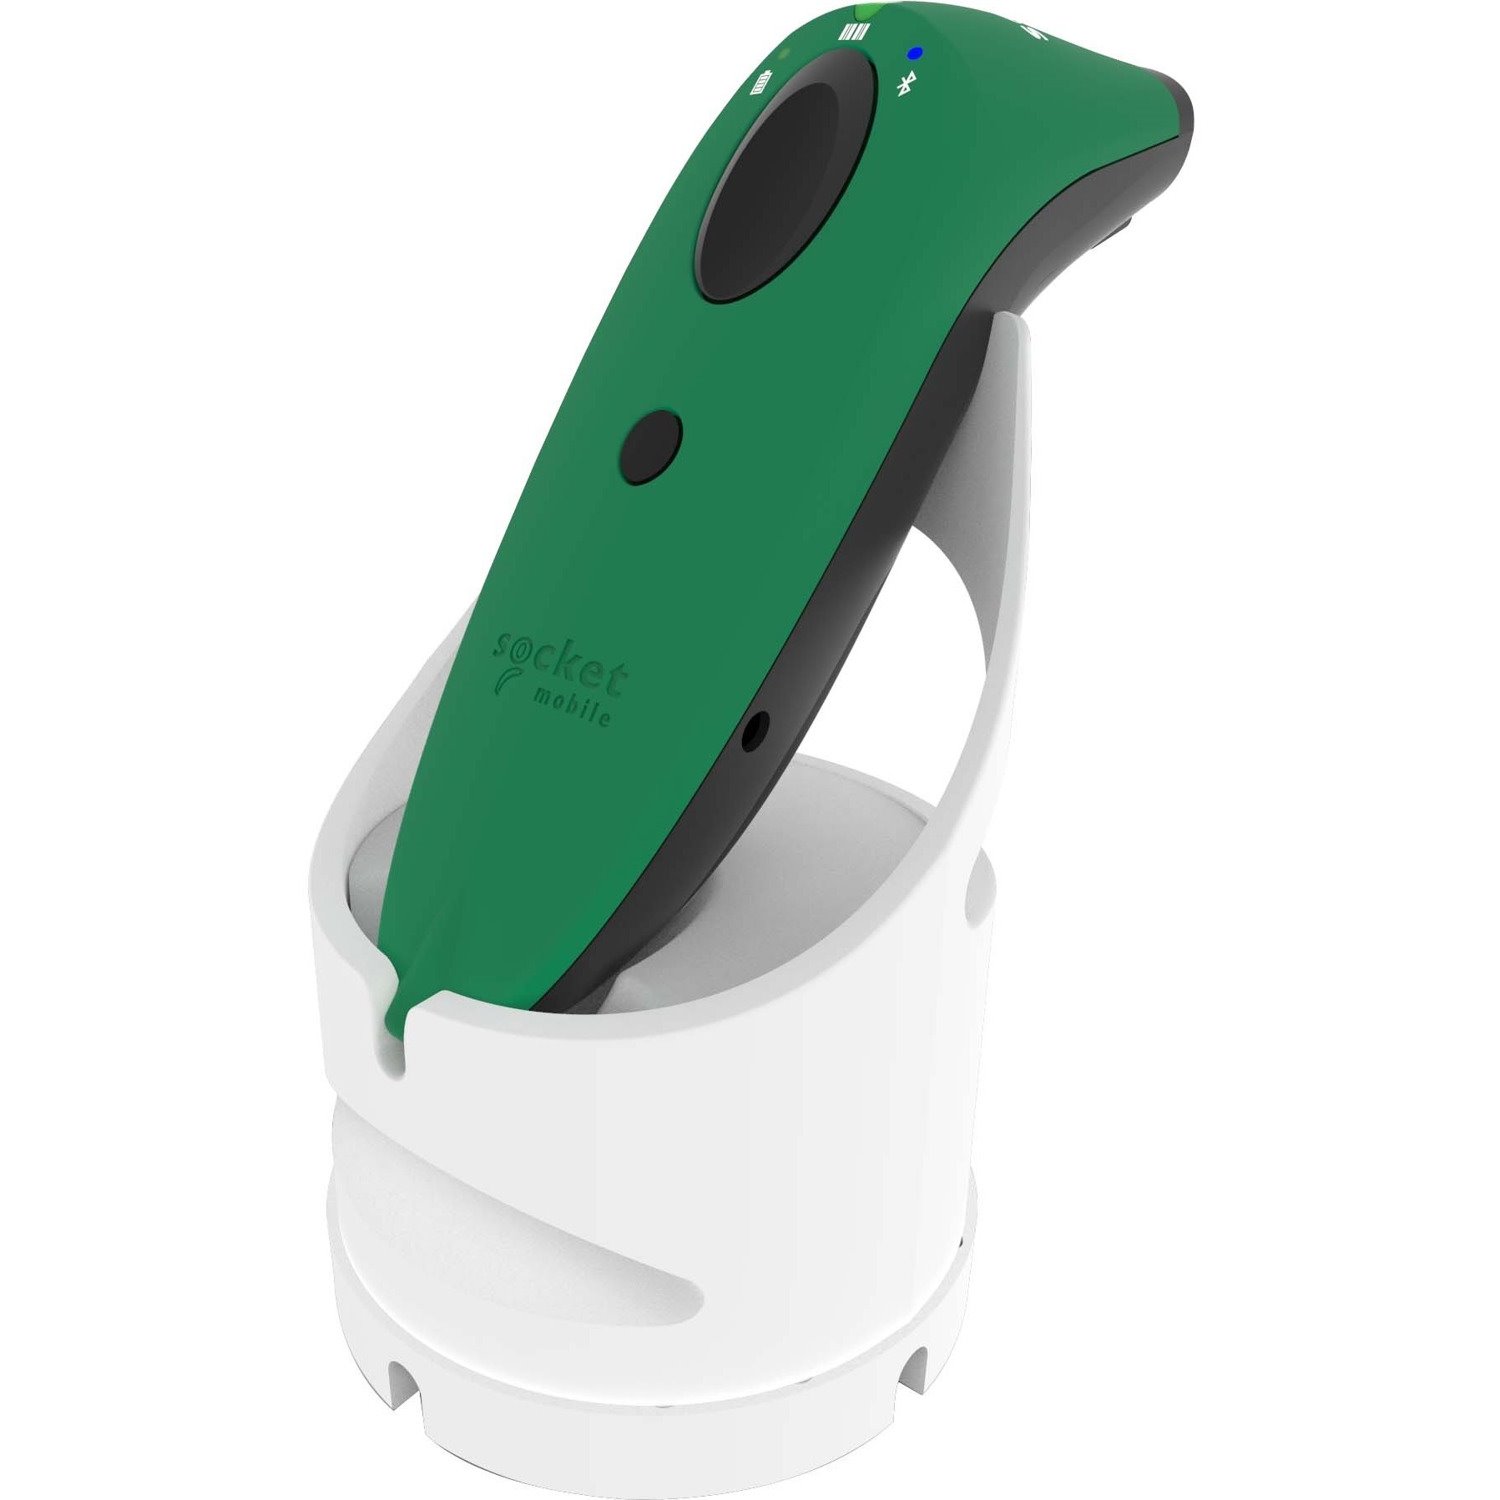 Socket Mobile SocketScan S740 Handheld Barcode Scanner - Wireless Connectivity - Green, White